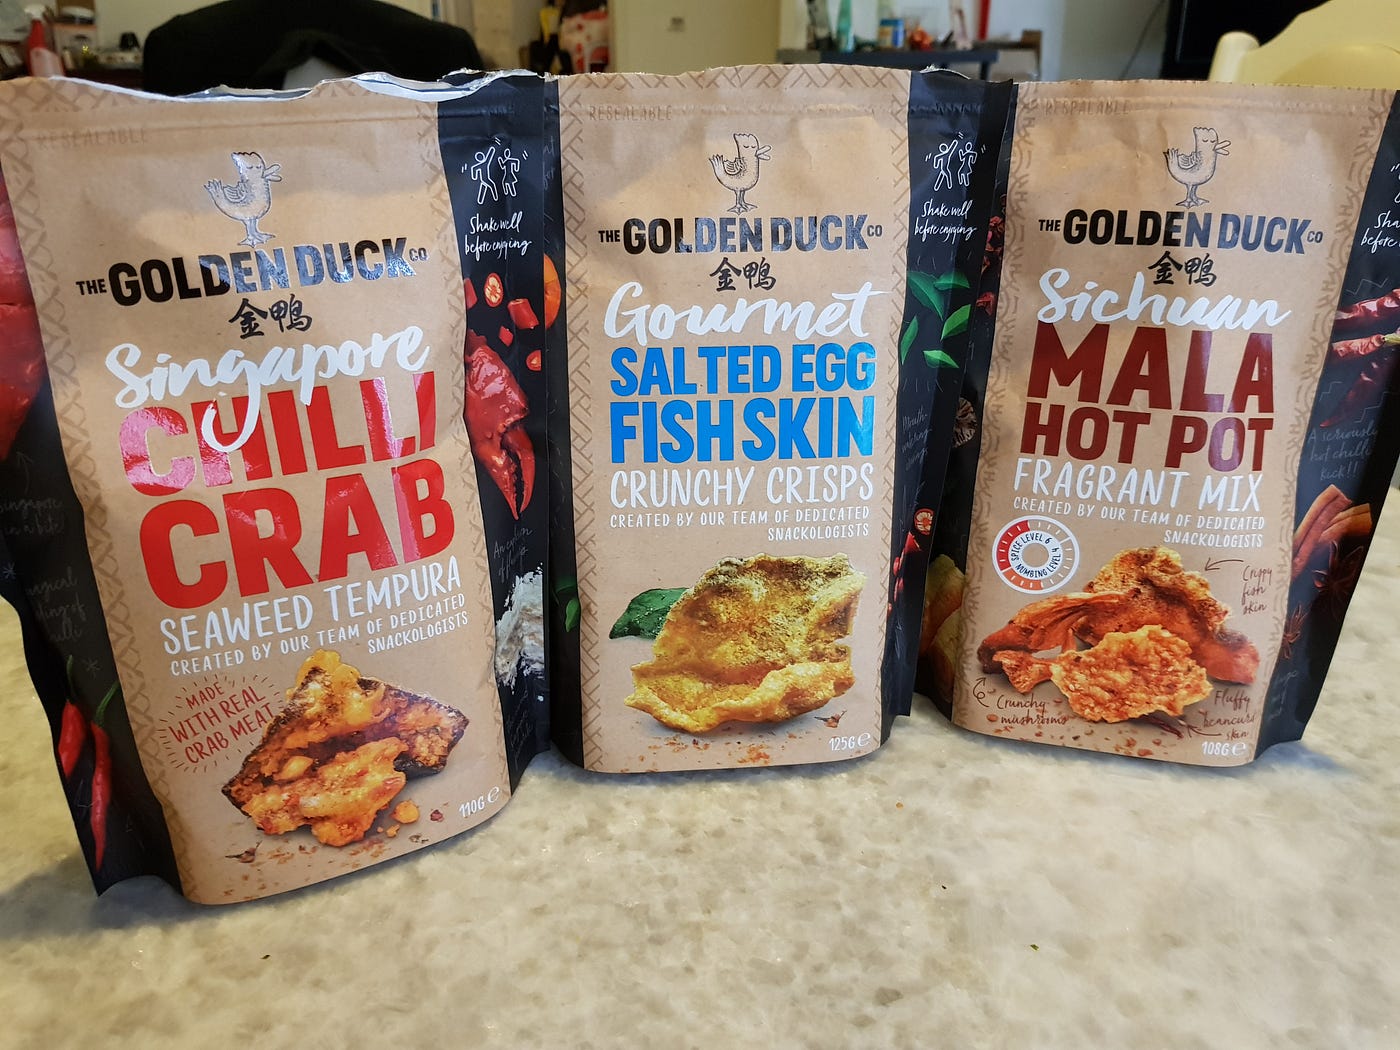 THE GOLDEN DUCK Salted Egg Fish Skin snack range [Review] | Medium